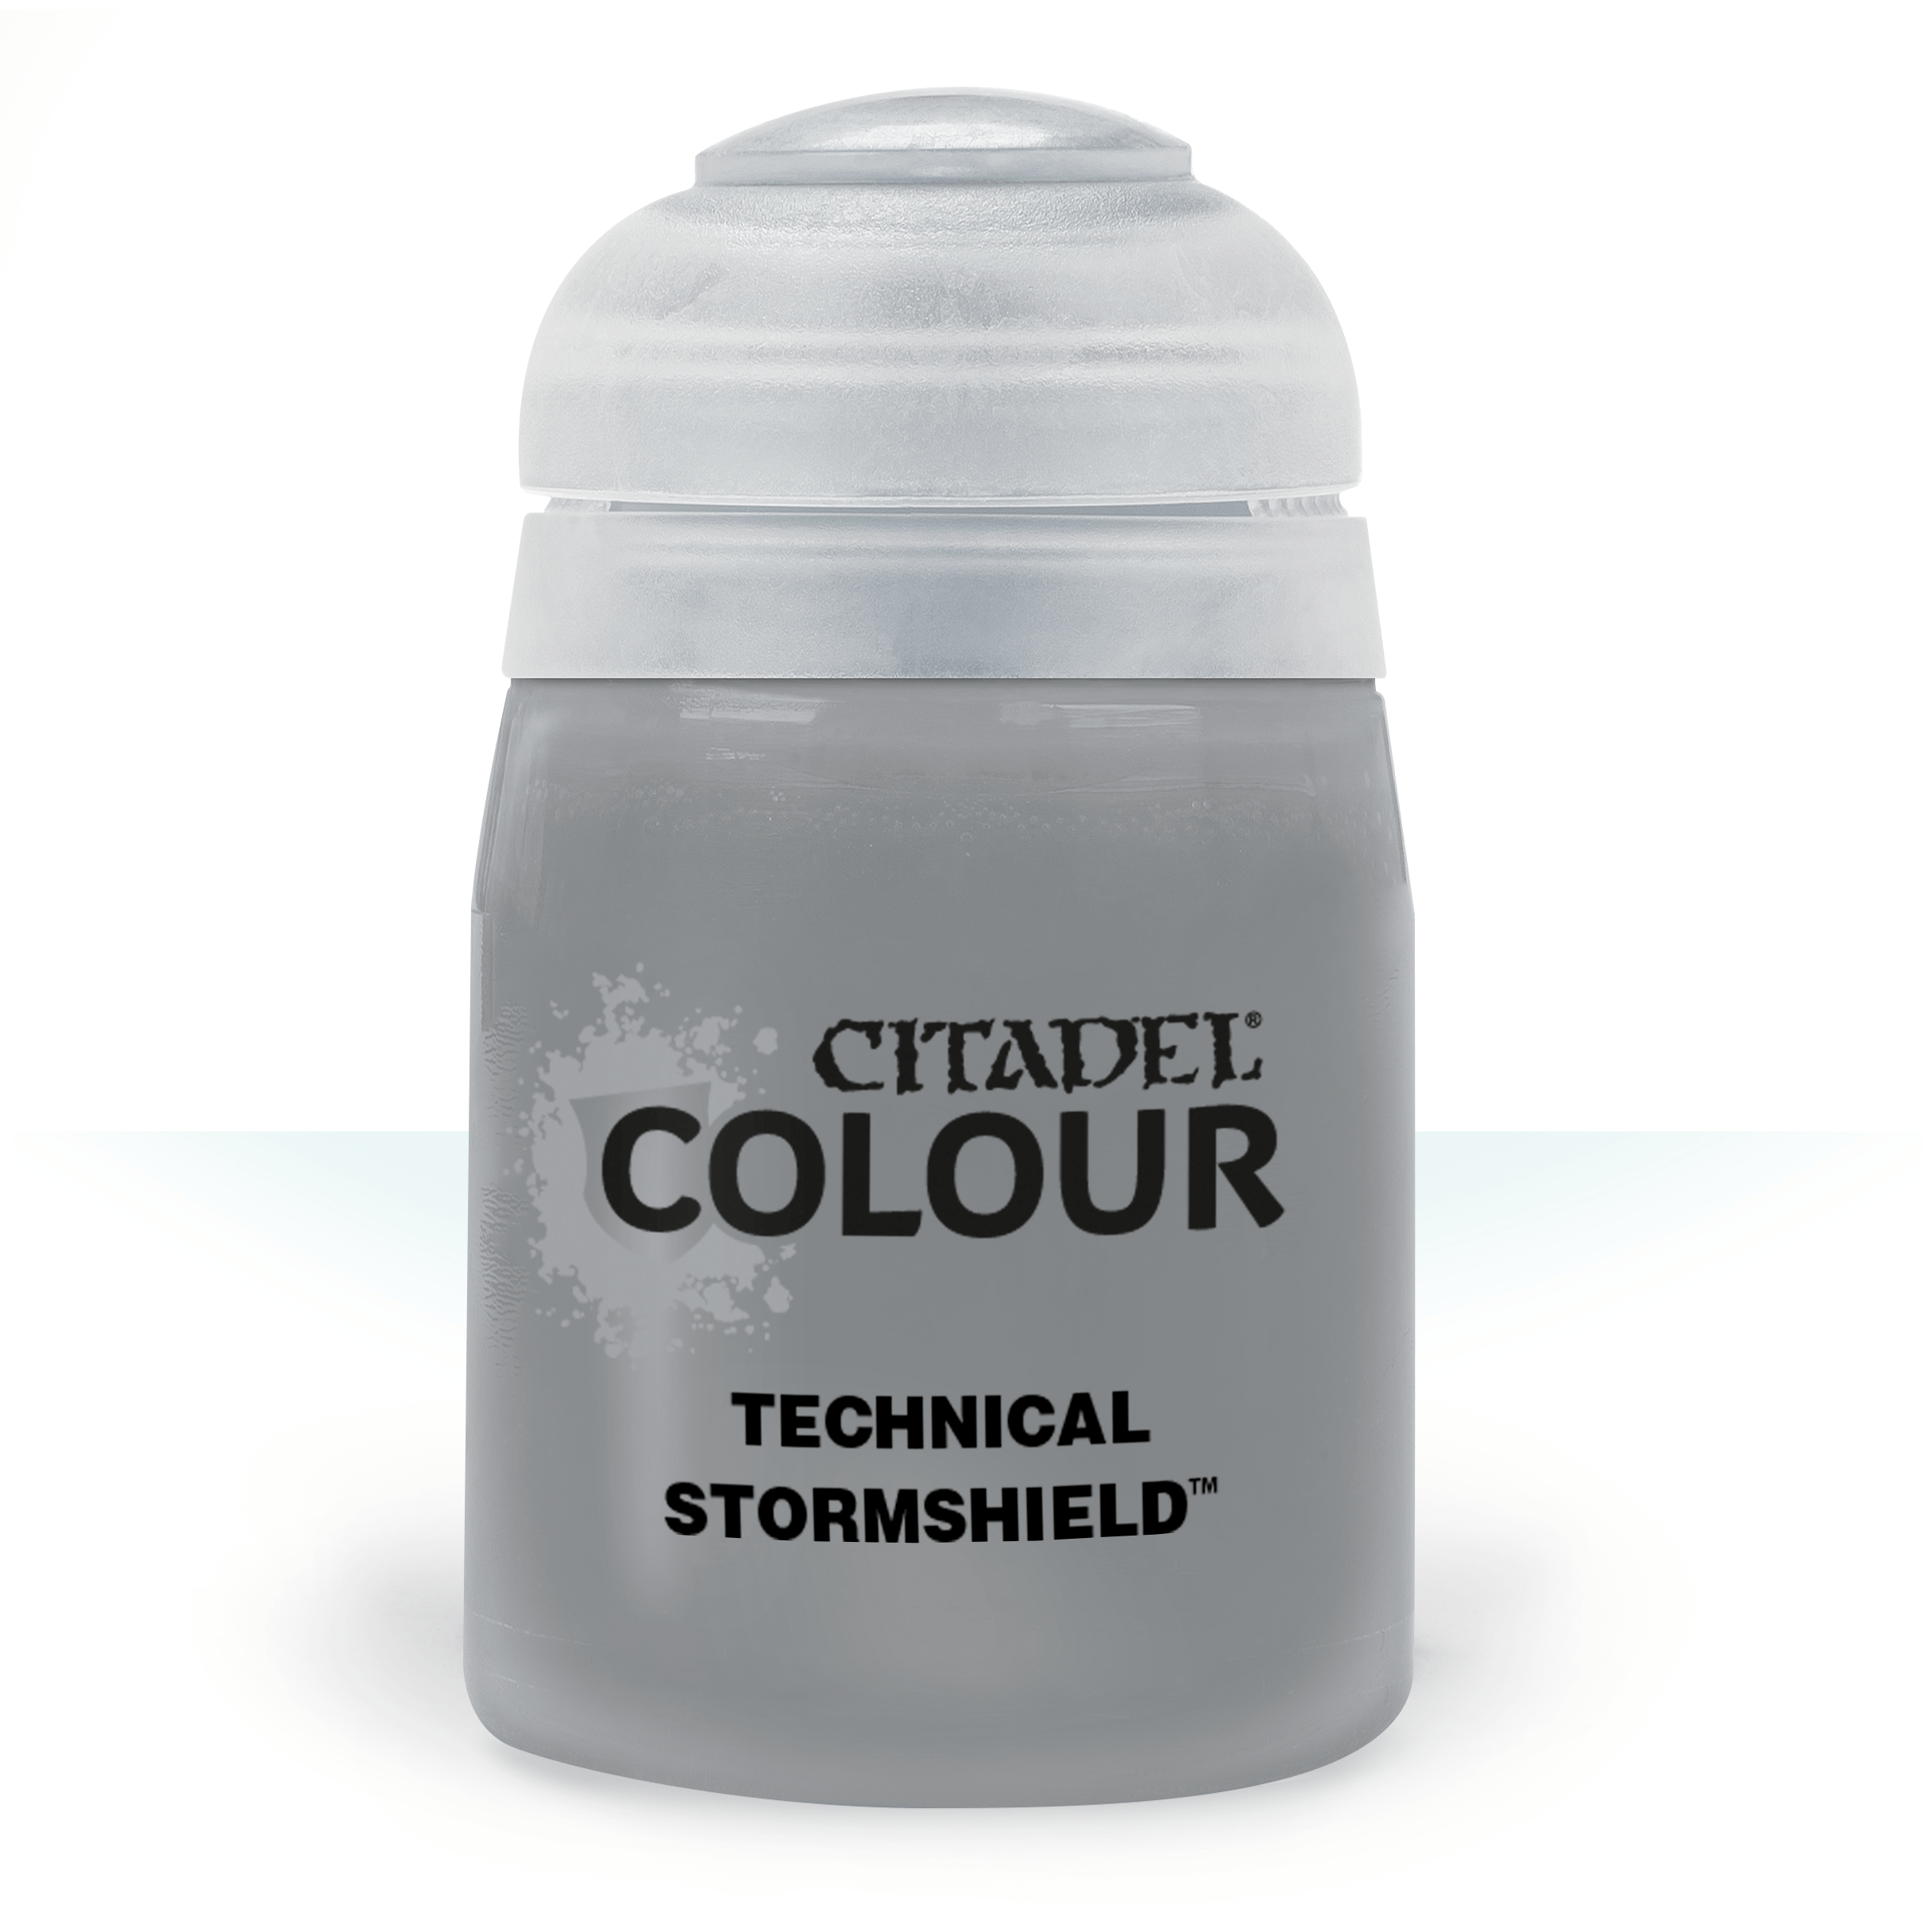 Technical Stormshield - Citadel Colour